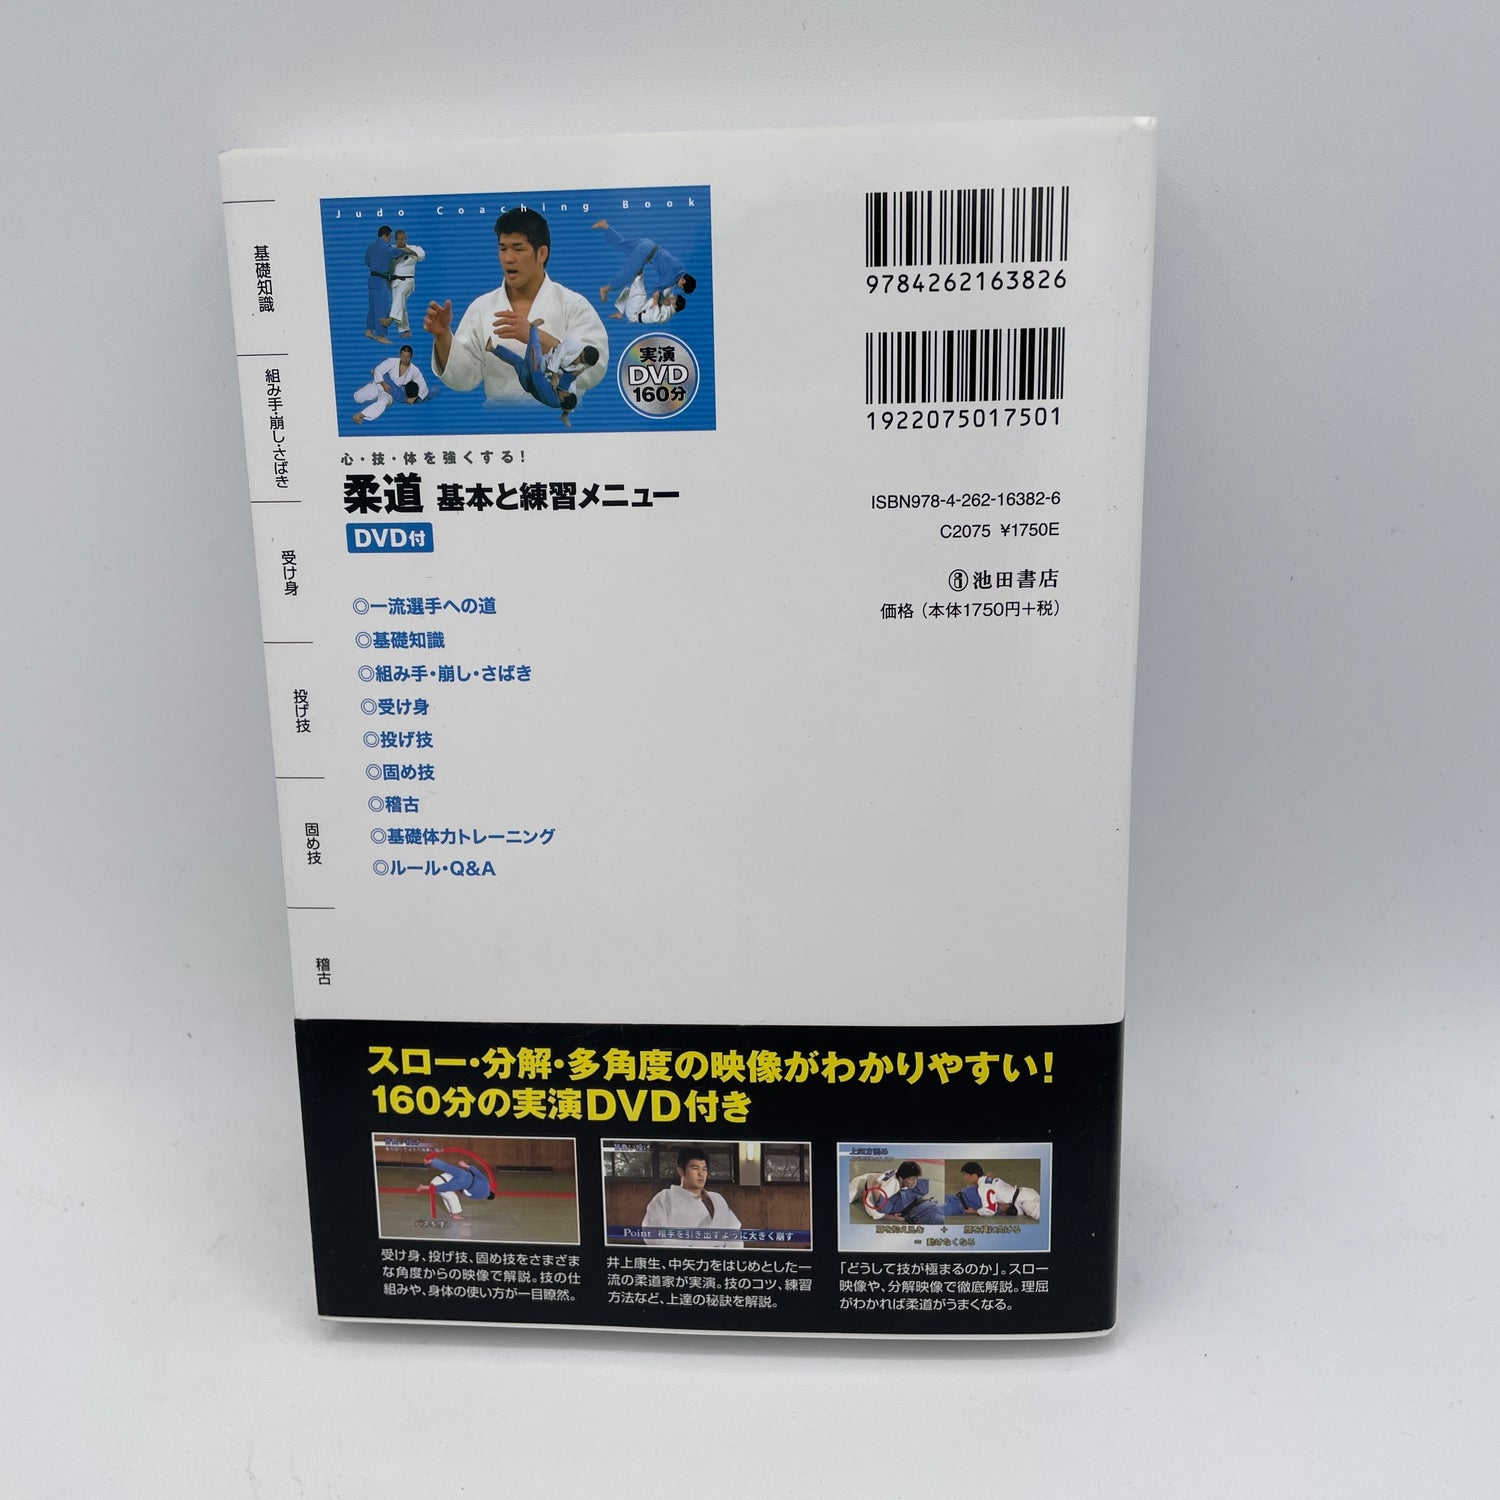 Strengthen Mind Body & Technique: Judo Basics Book & DVD by Kosei Inoue